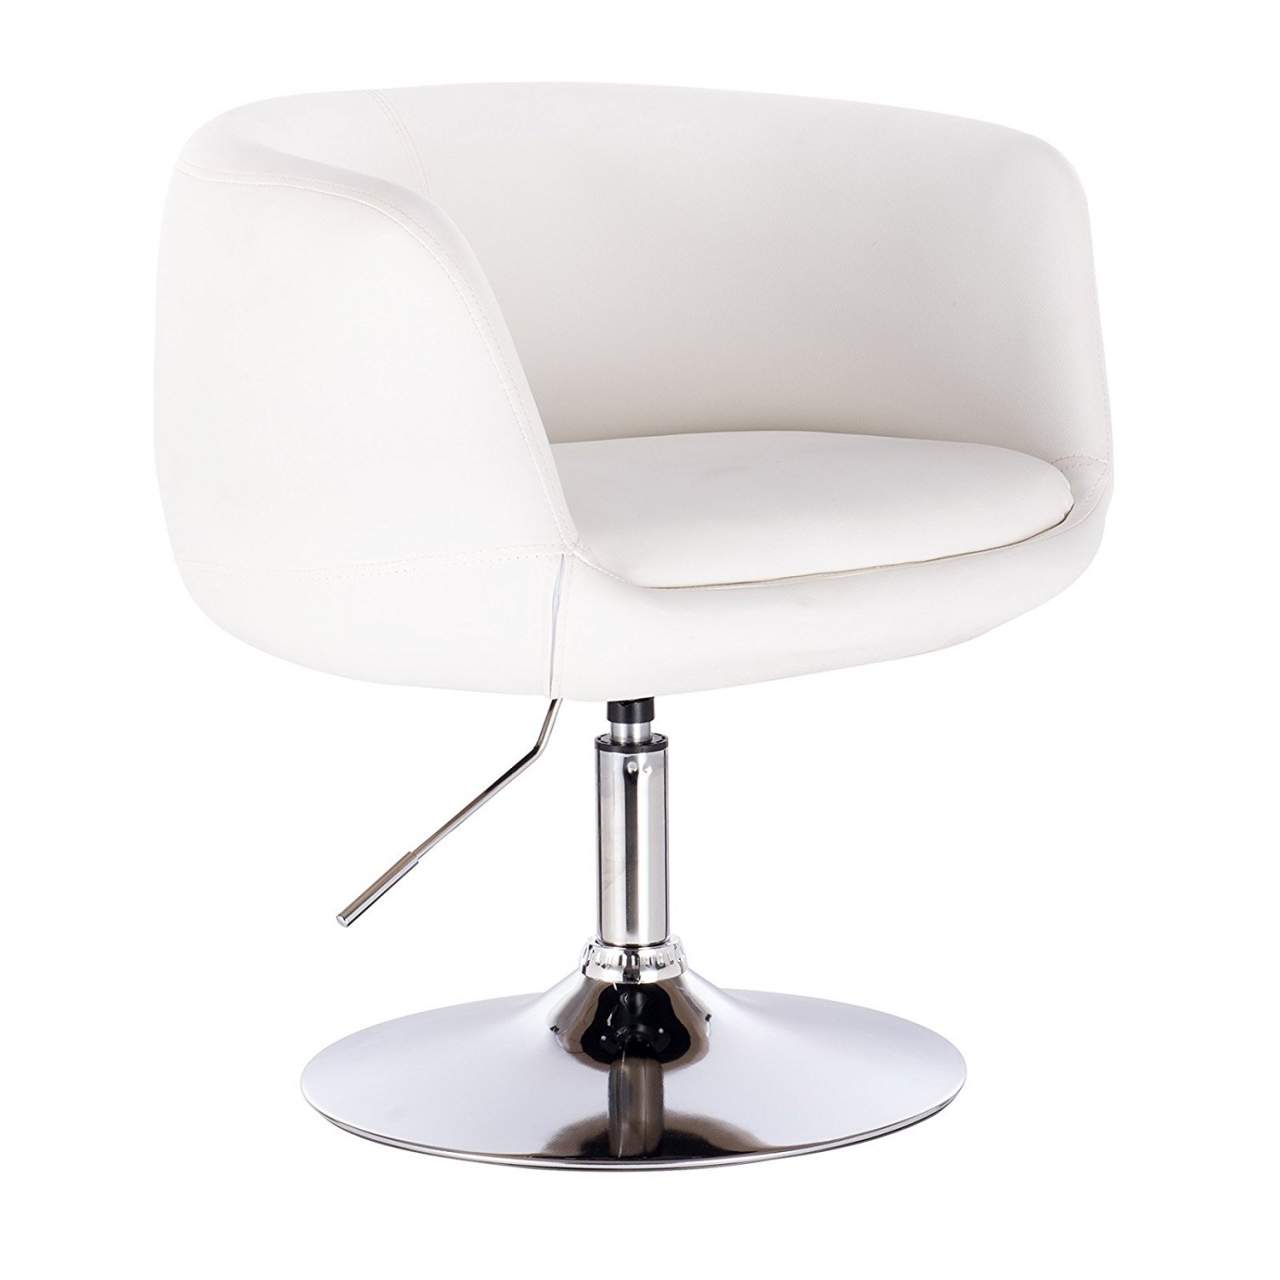 1 x Barsessel Loungesessel Sessel mit Lehne Kunstleder Schwarz+Weiss BH41szw-1 